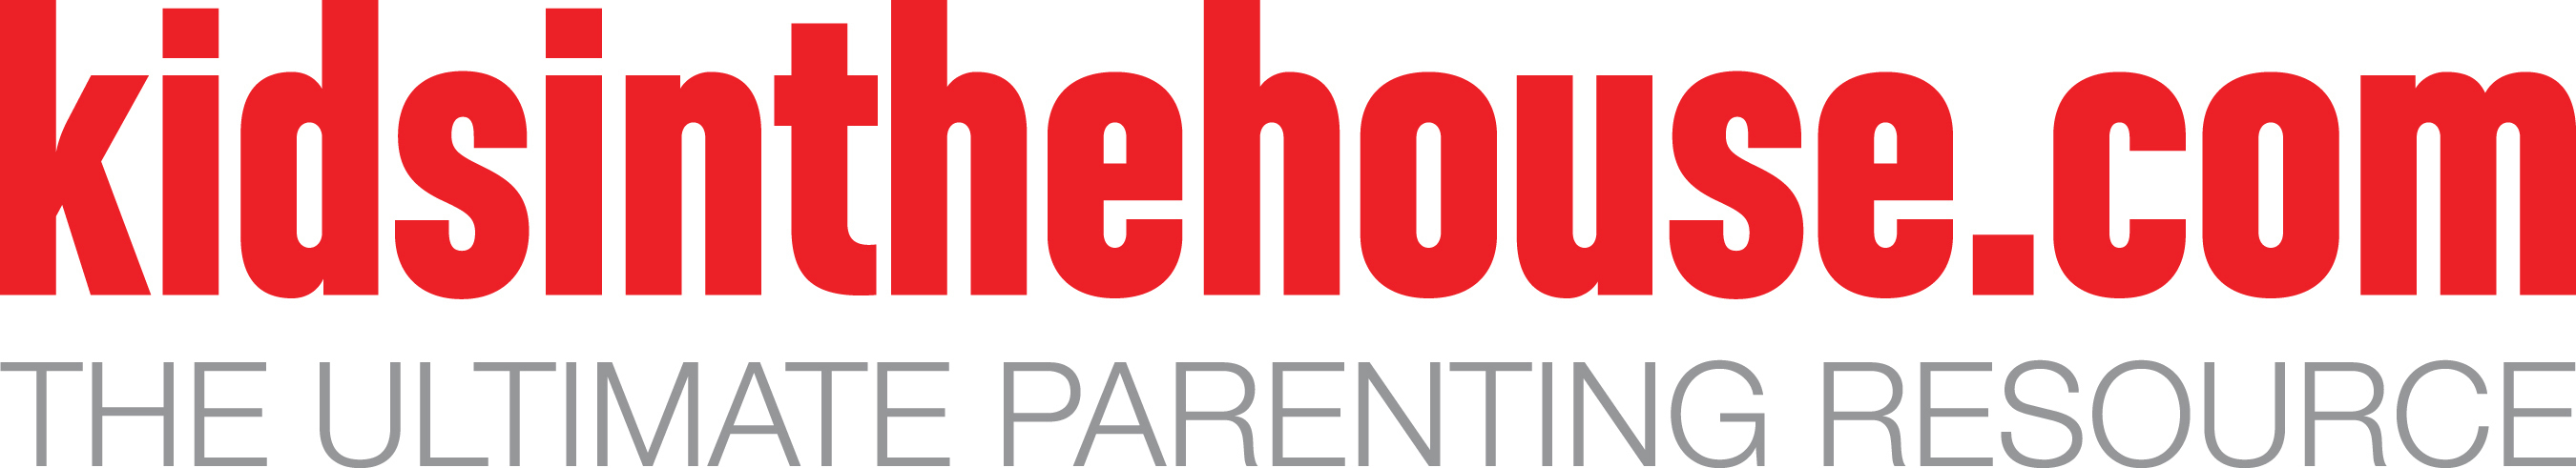 Kids in the House Logo. (PRNewsFoto/Kids In The House) (PRNewsFoto/KIDS IN THE HOUSE)